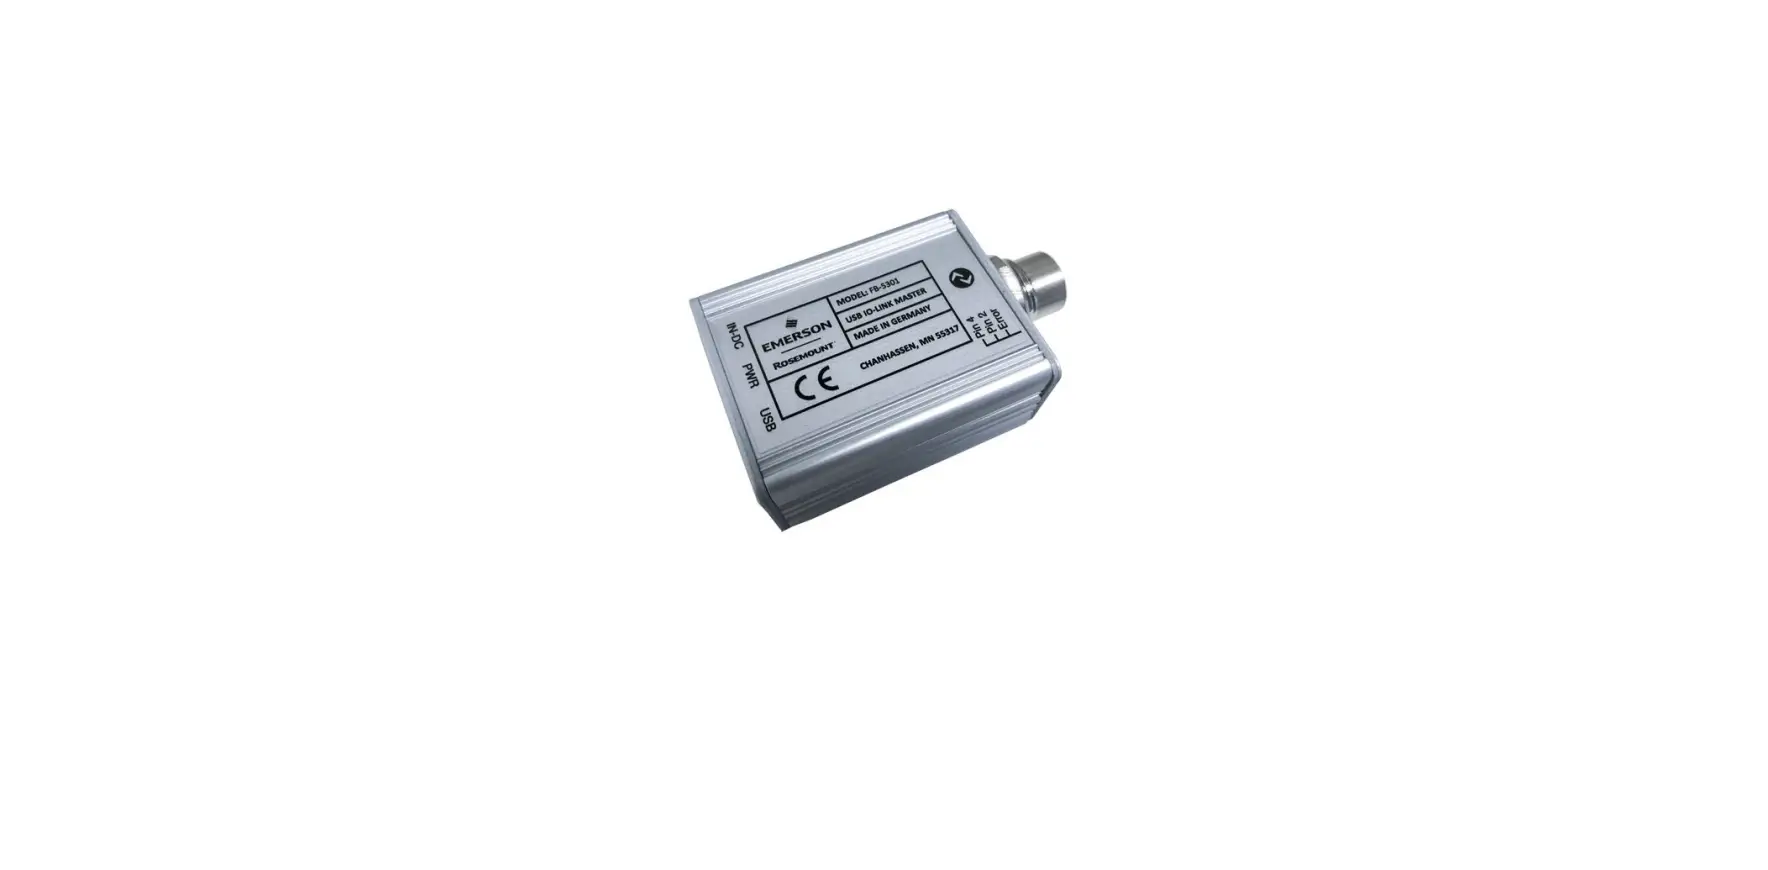 Rosemount IO-Link USB Communicator